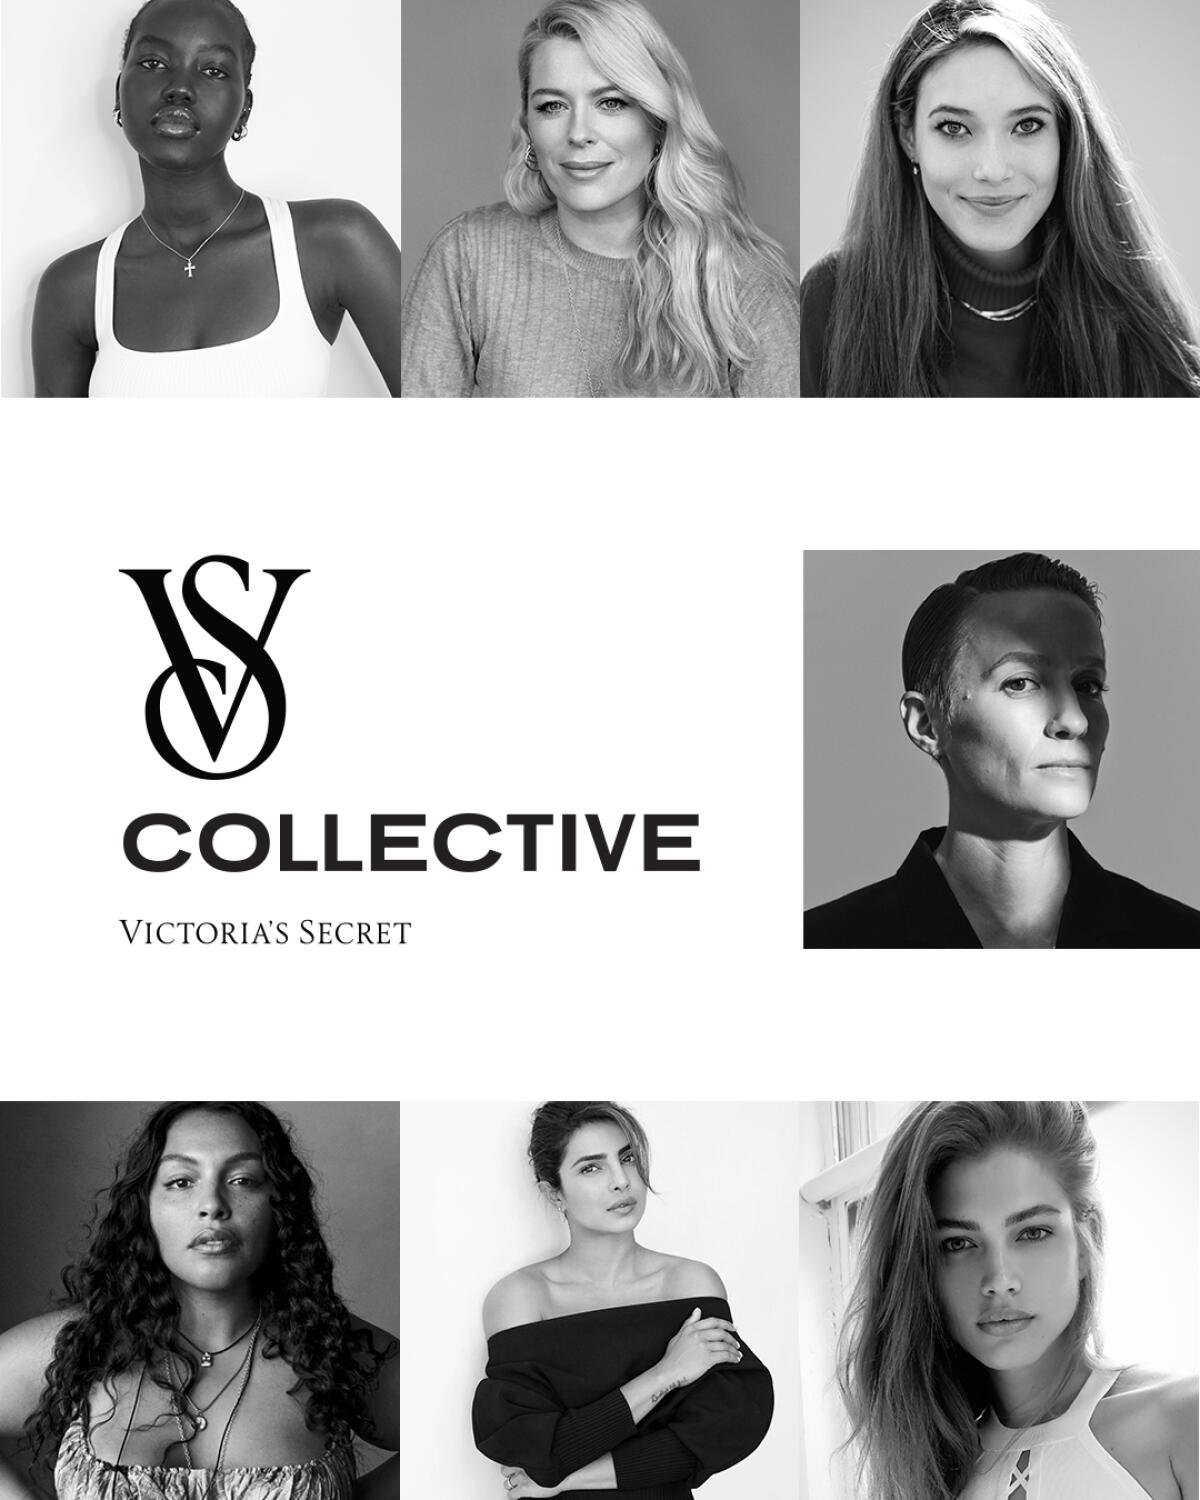 Victoria's Secret promo art announcing VS Collective marketing effort